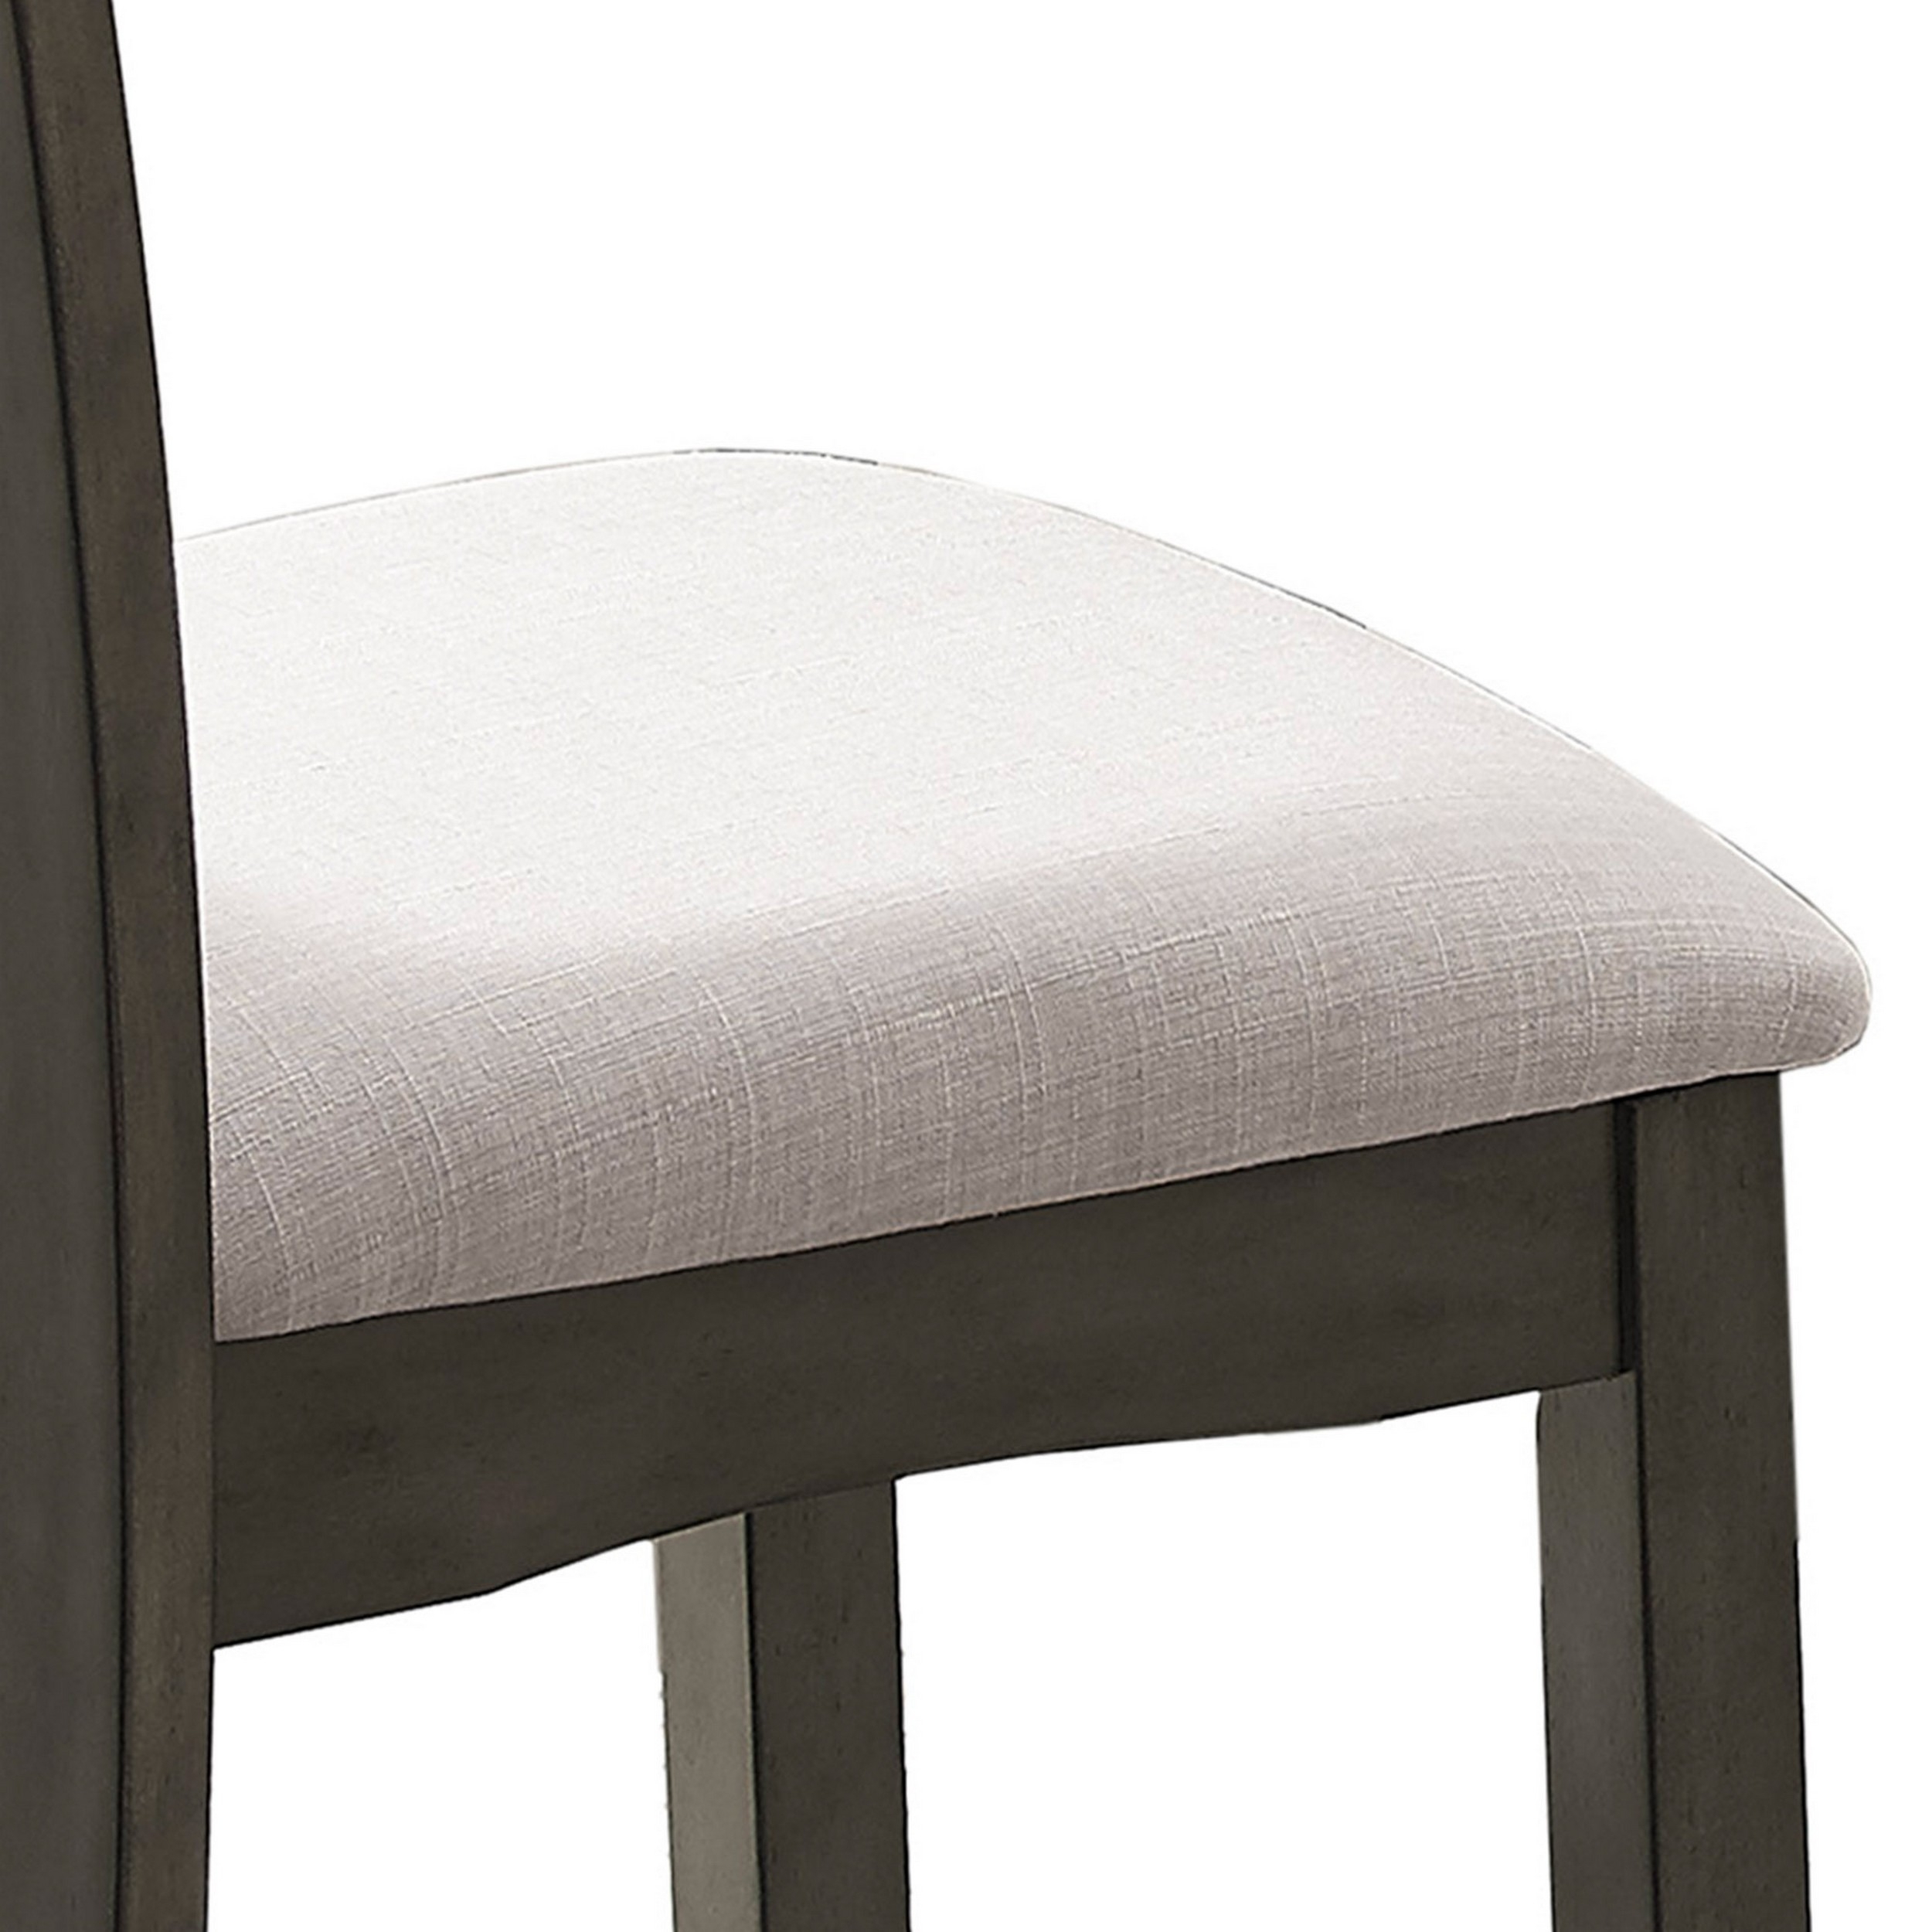 Brandon 25 Inch Counter Height Chair Set Of 2, Fabric Upholstery, Gray -Saltoro Sherpi